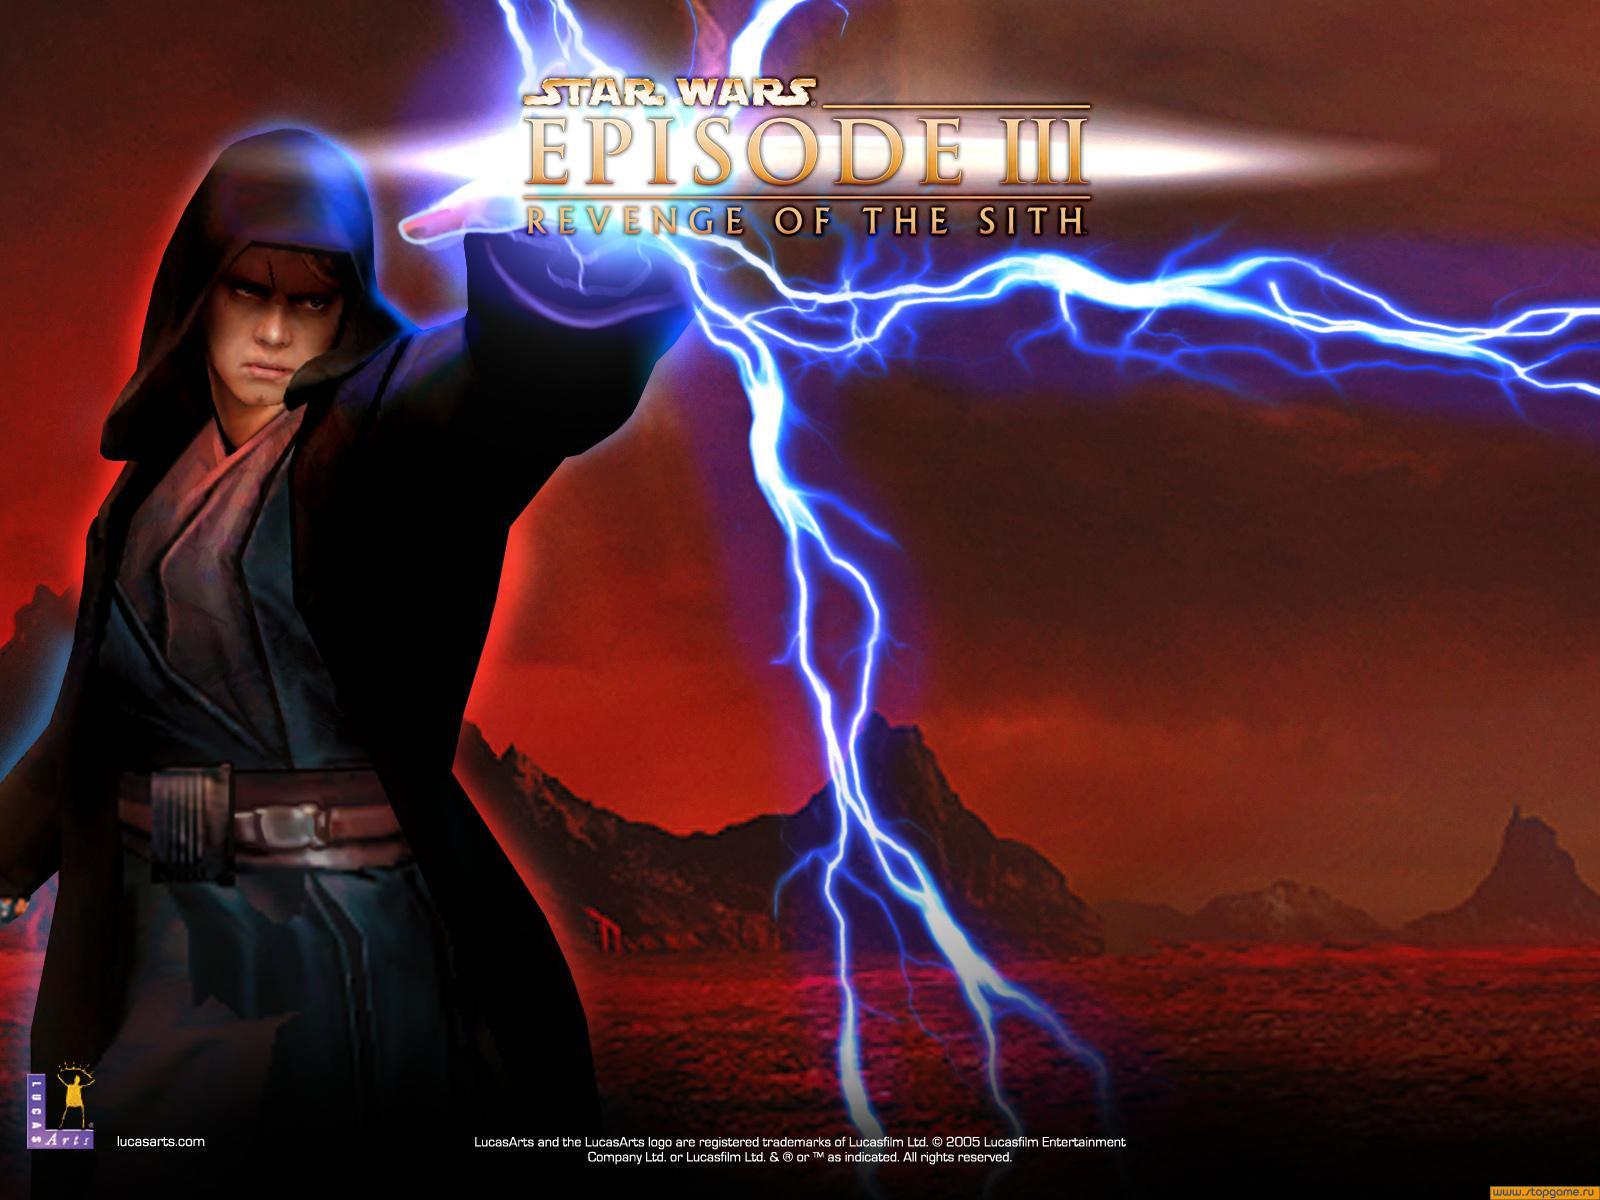 Star Wars Episode III   Revenge of the Sith wallpaper free download